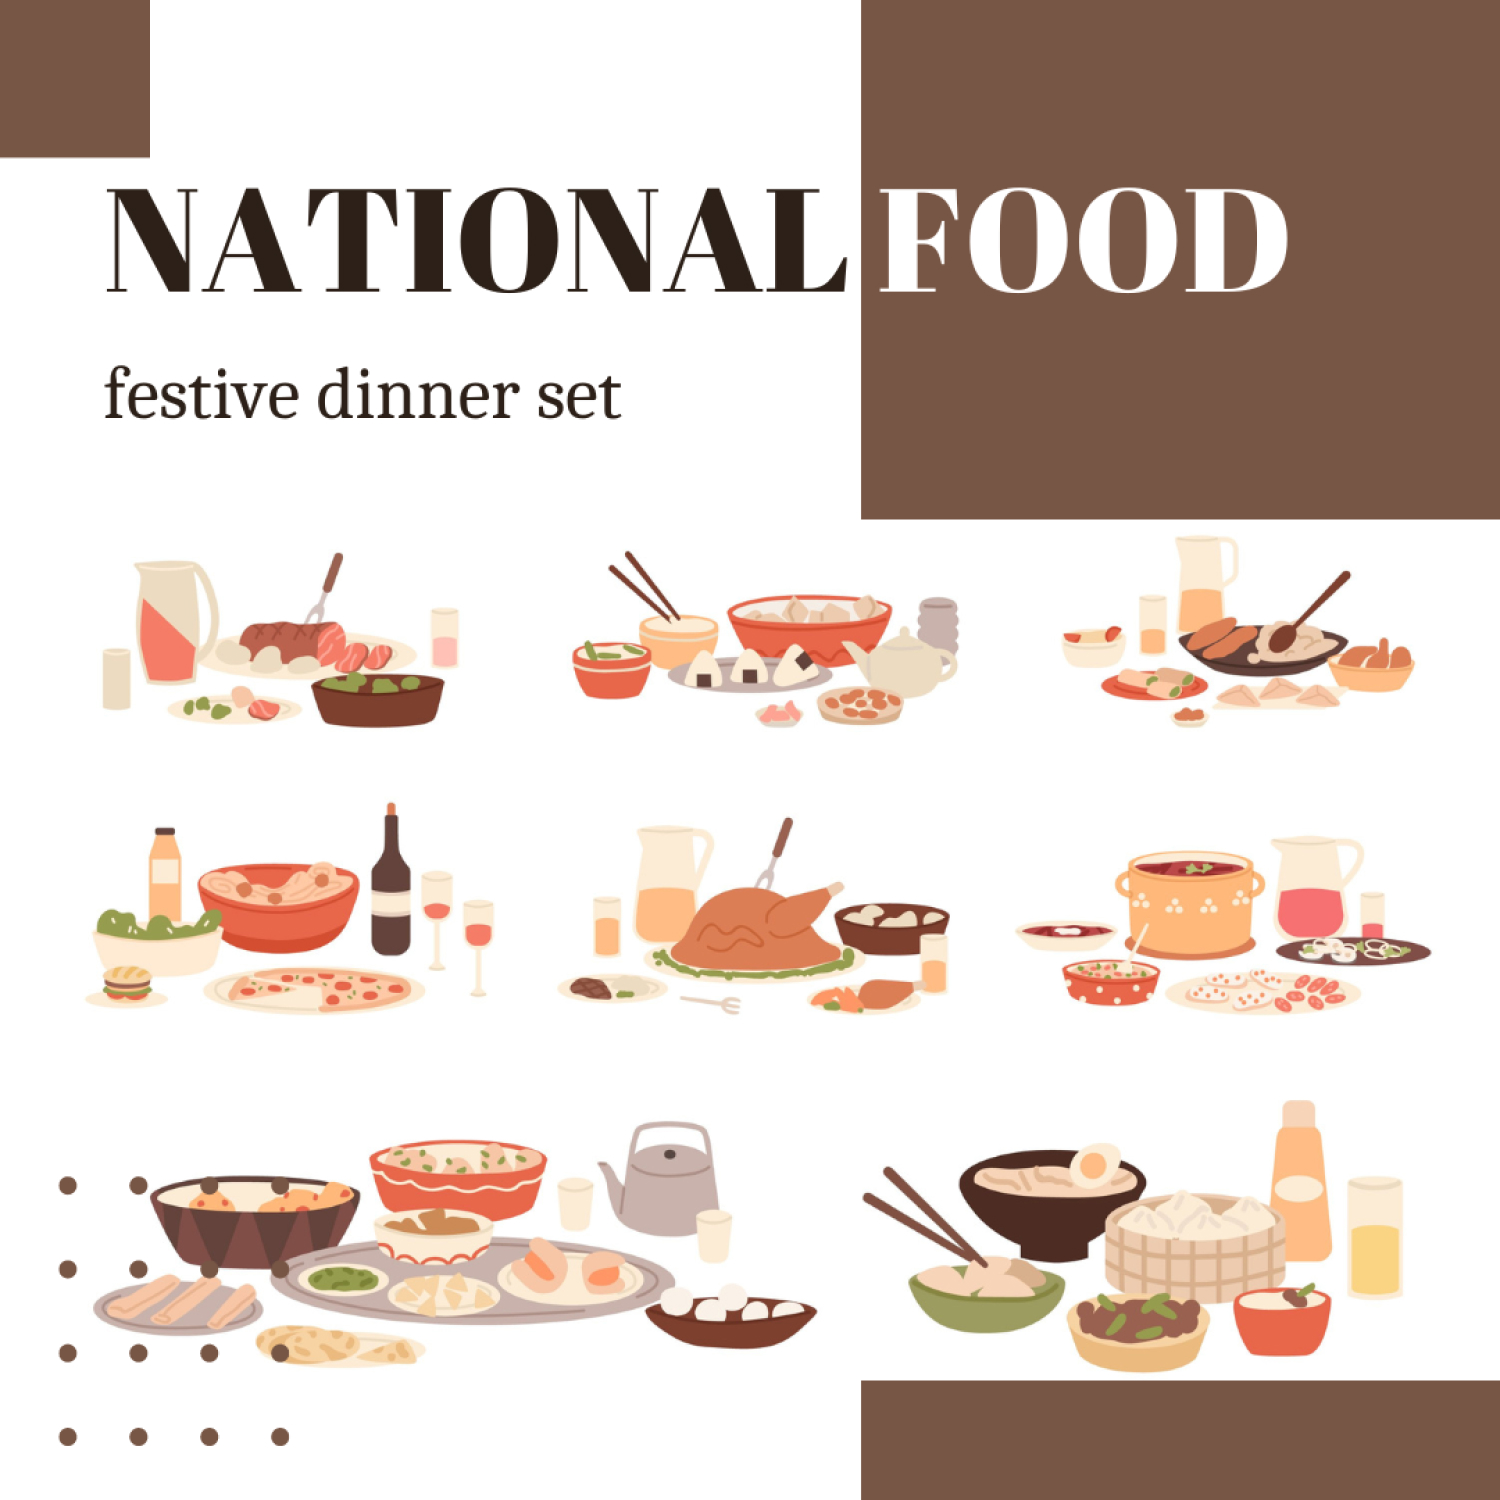 Prints of national food.